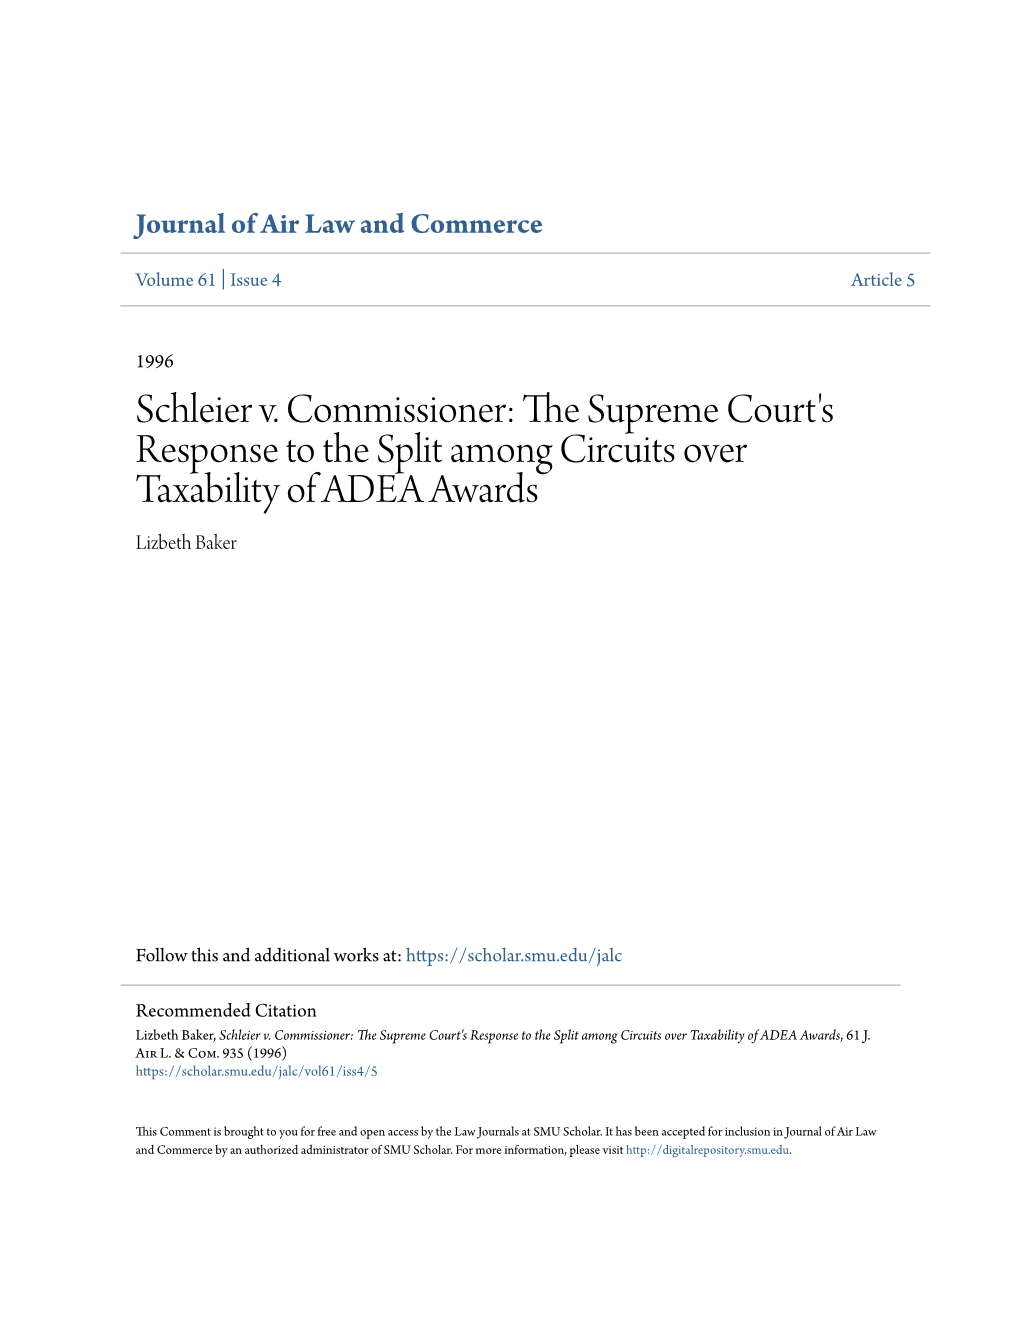 Schleier V. Commissioner: the Uprs Eme Court's Response to the Split Among Circuits Over Taxability of ADEA Awards Lizbeth Baker